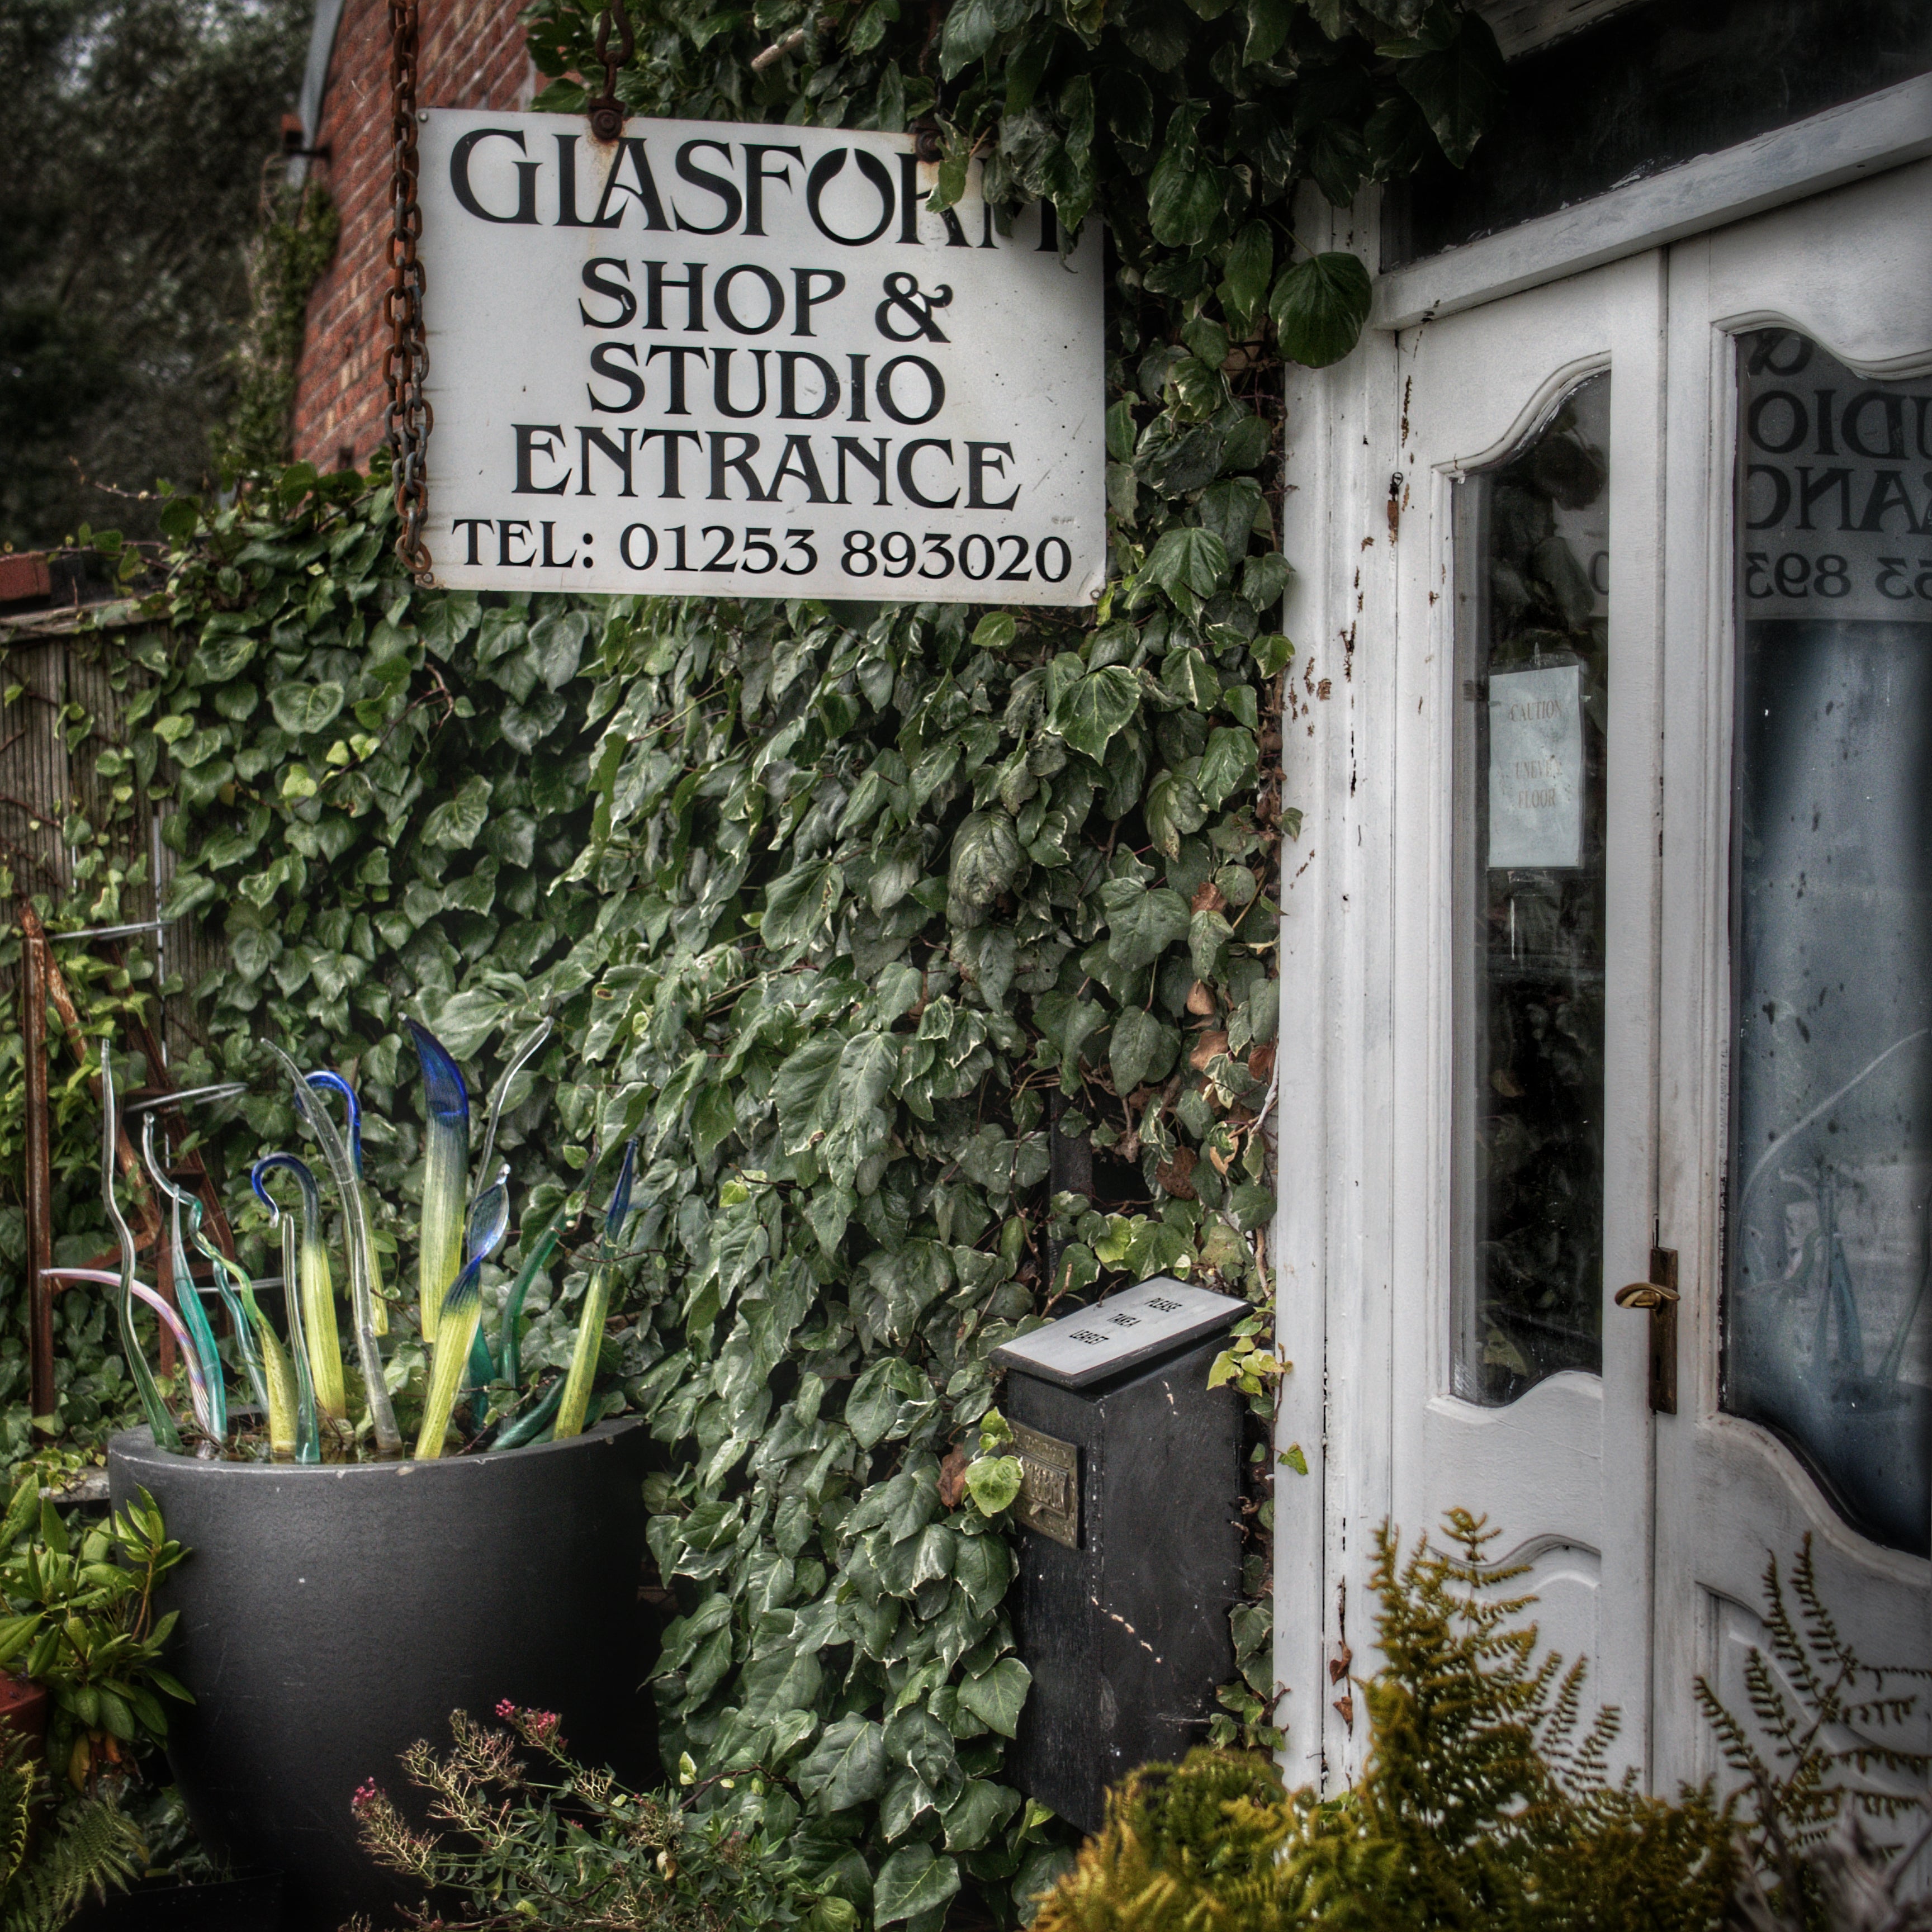 Entrance to the Glasform Studio.